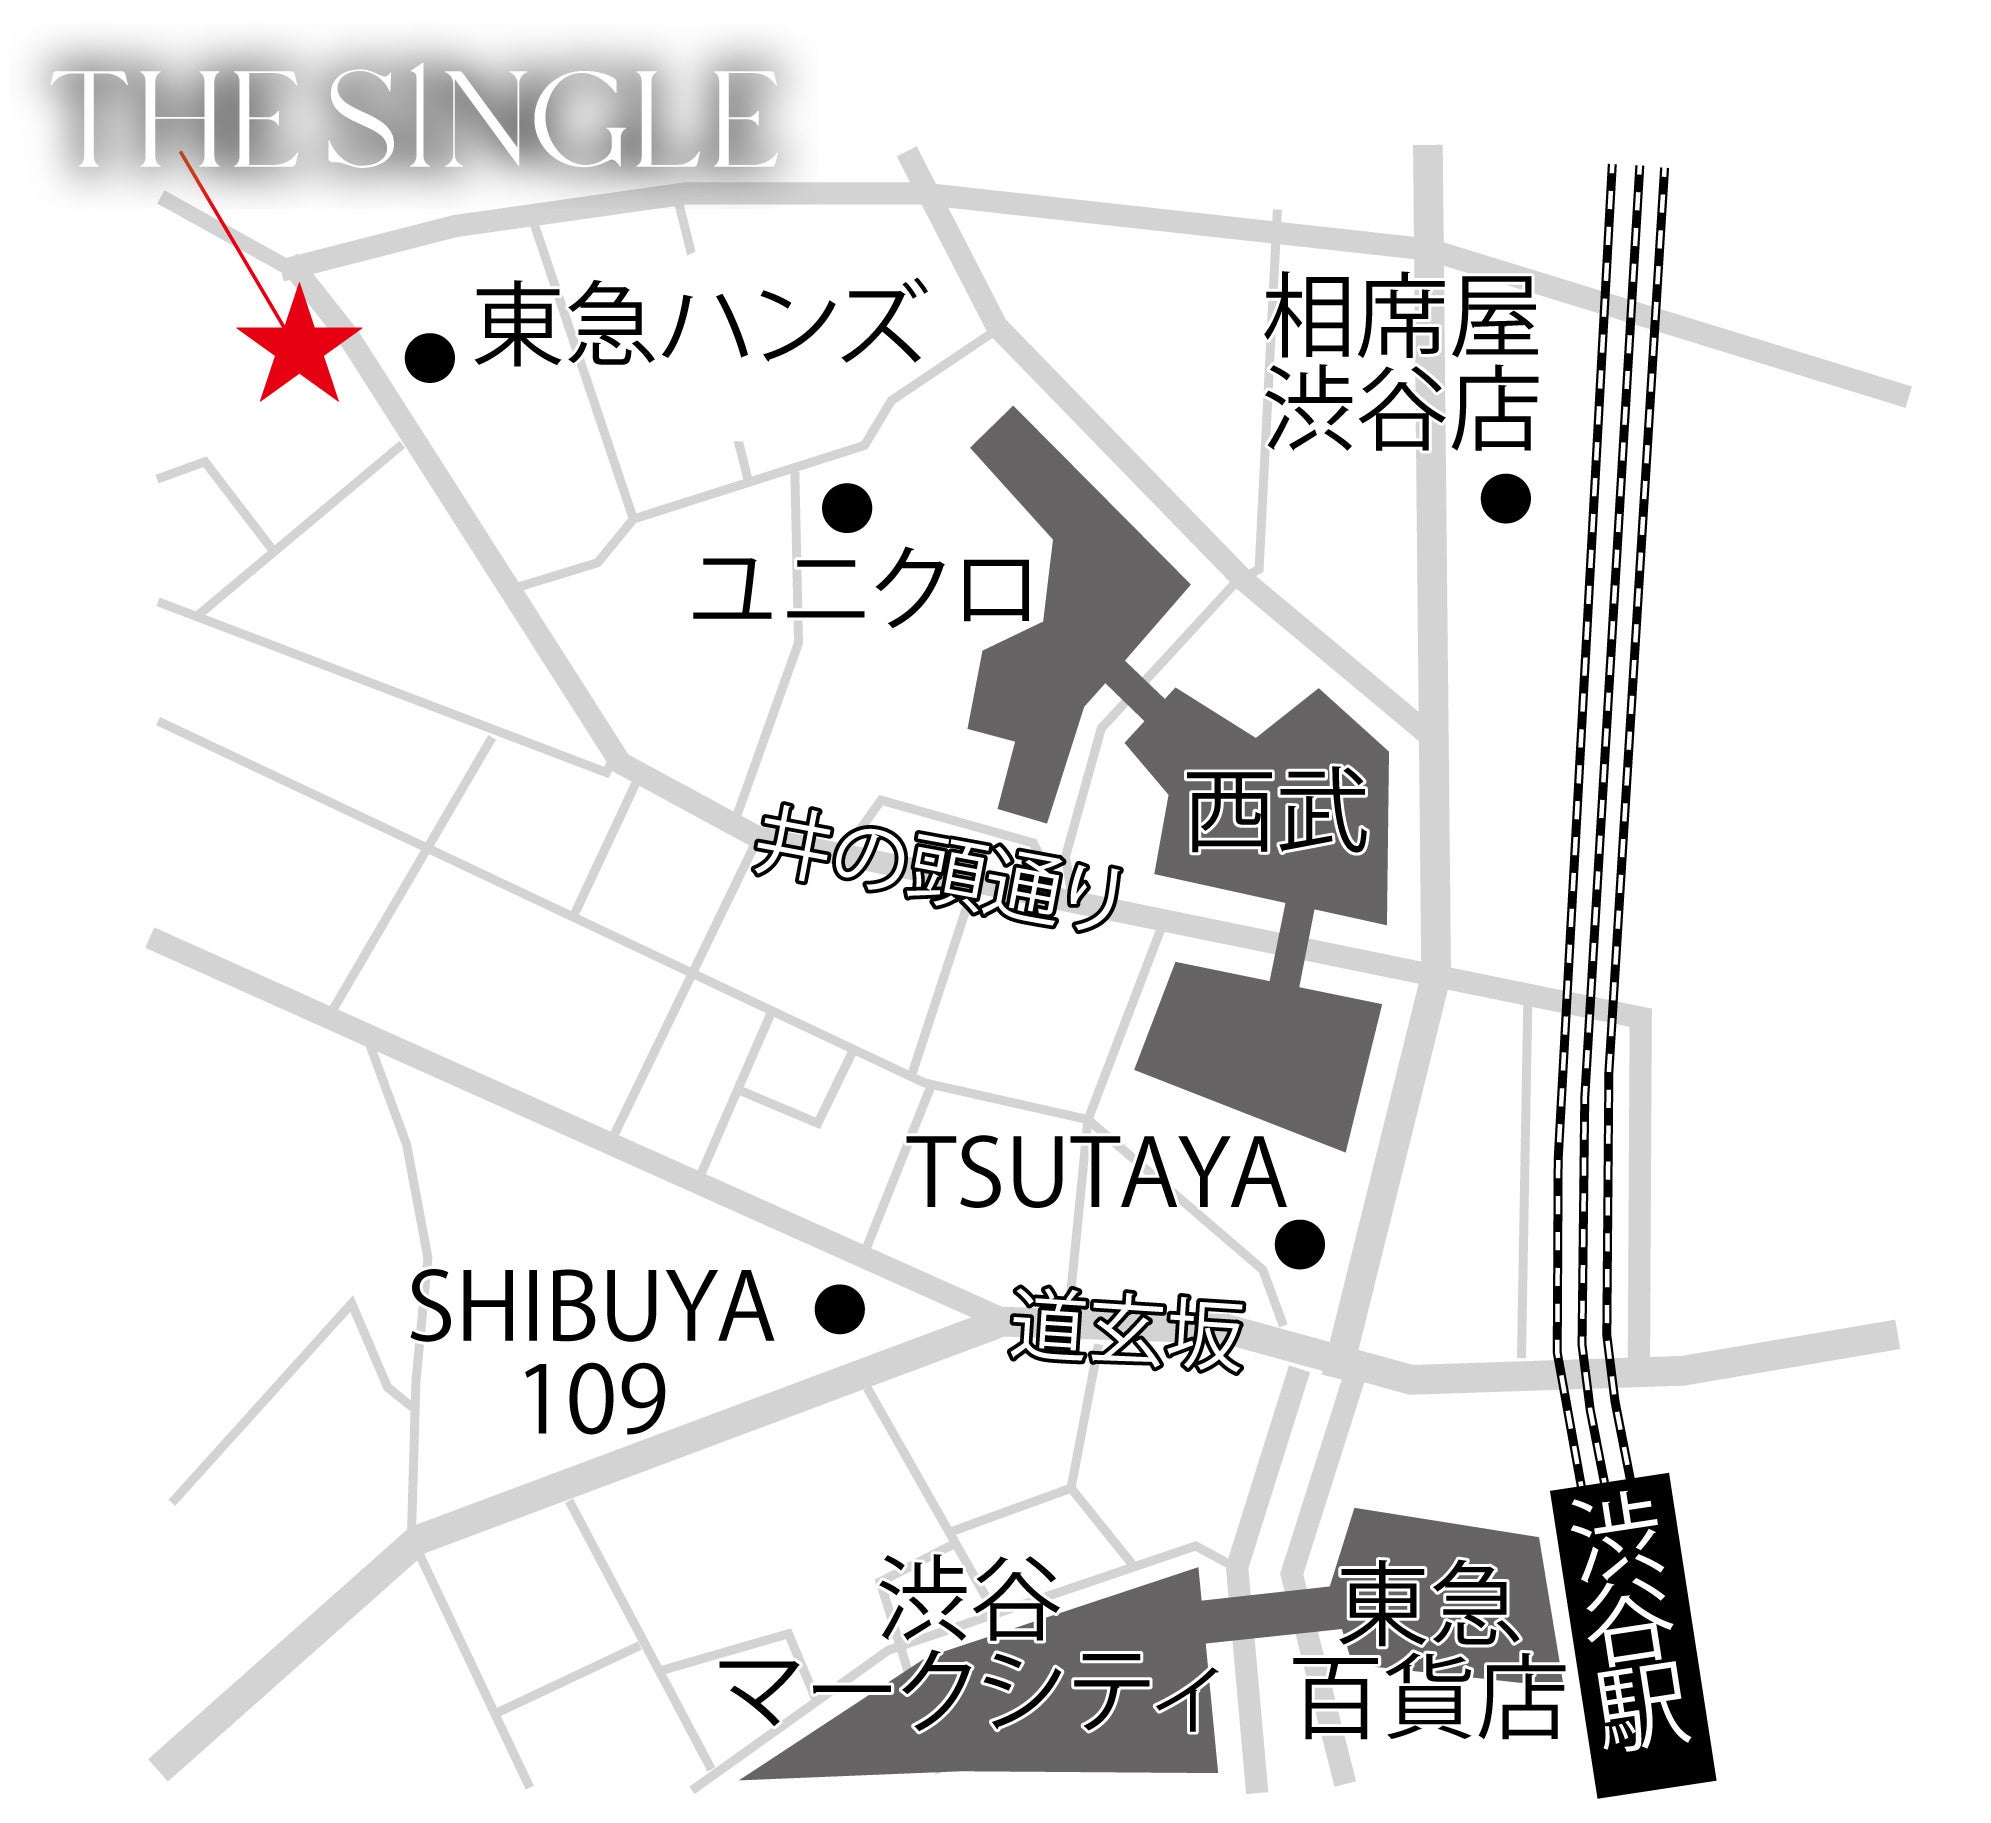 THE SINGLE(ザ・シングル) 渋谷店